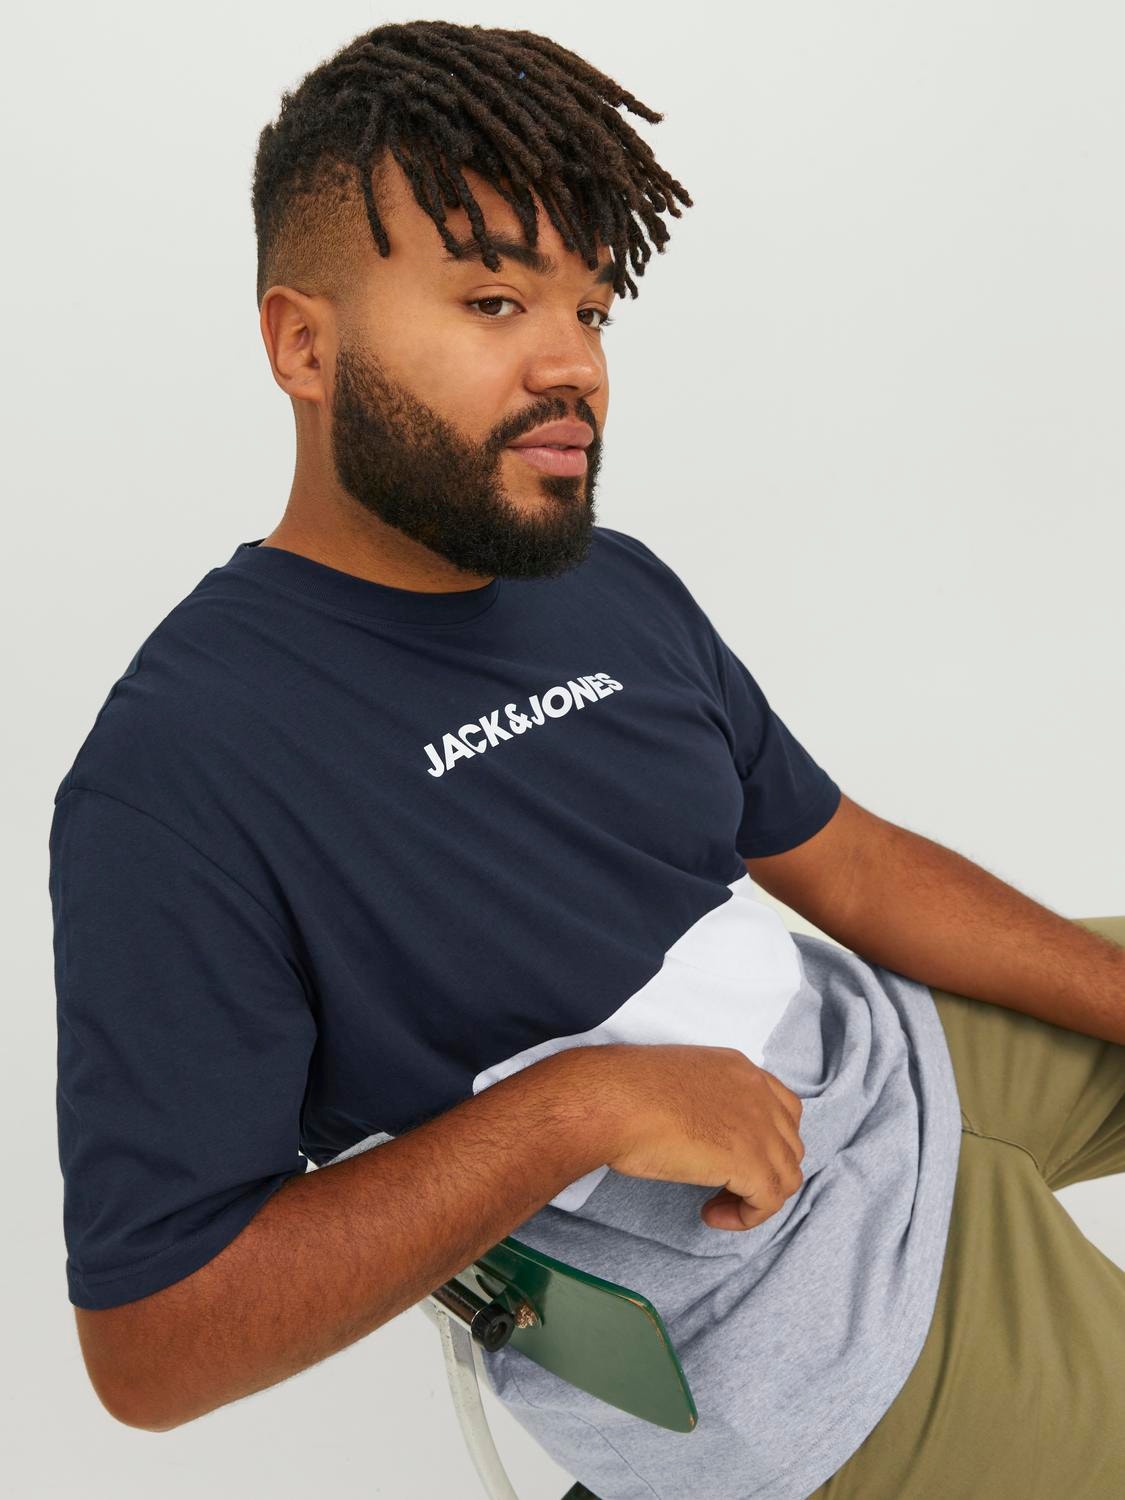 Jack & Jones Plus Size Camiseta Bloques de color -Navy Blazer - 12243653